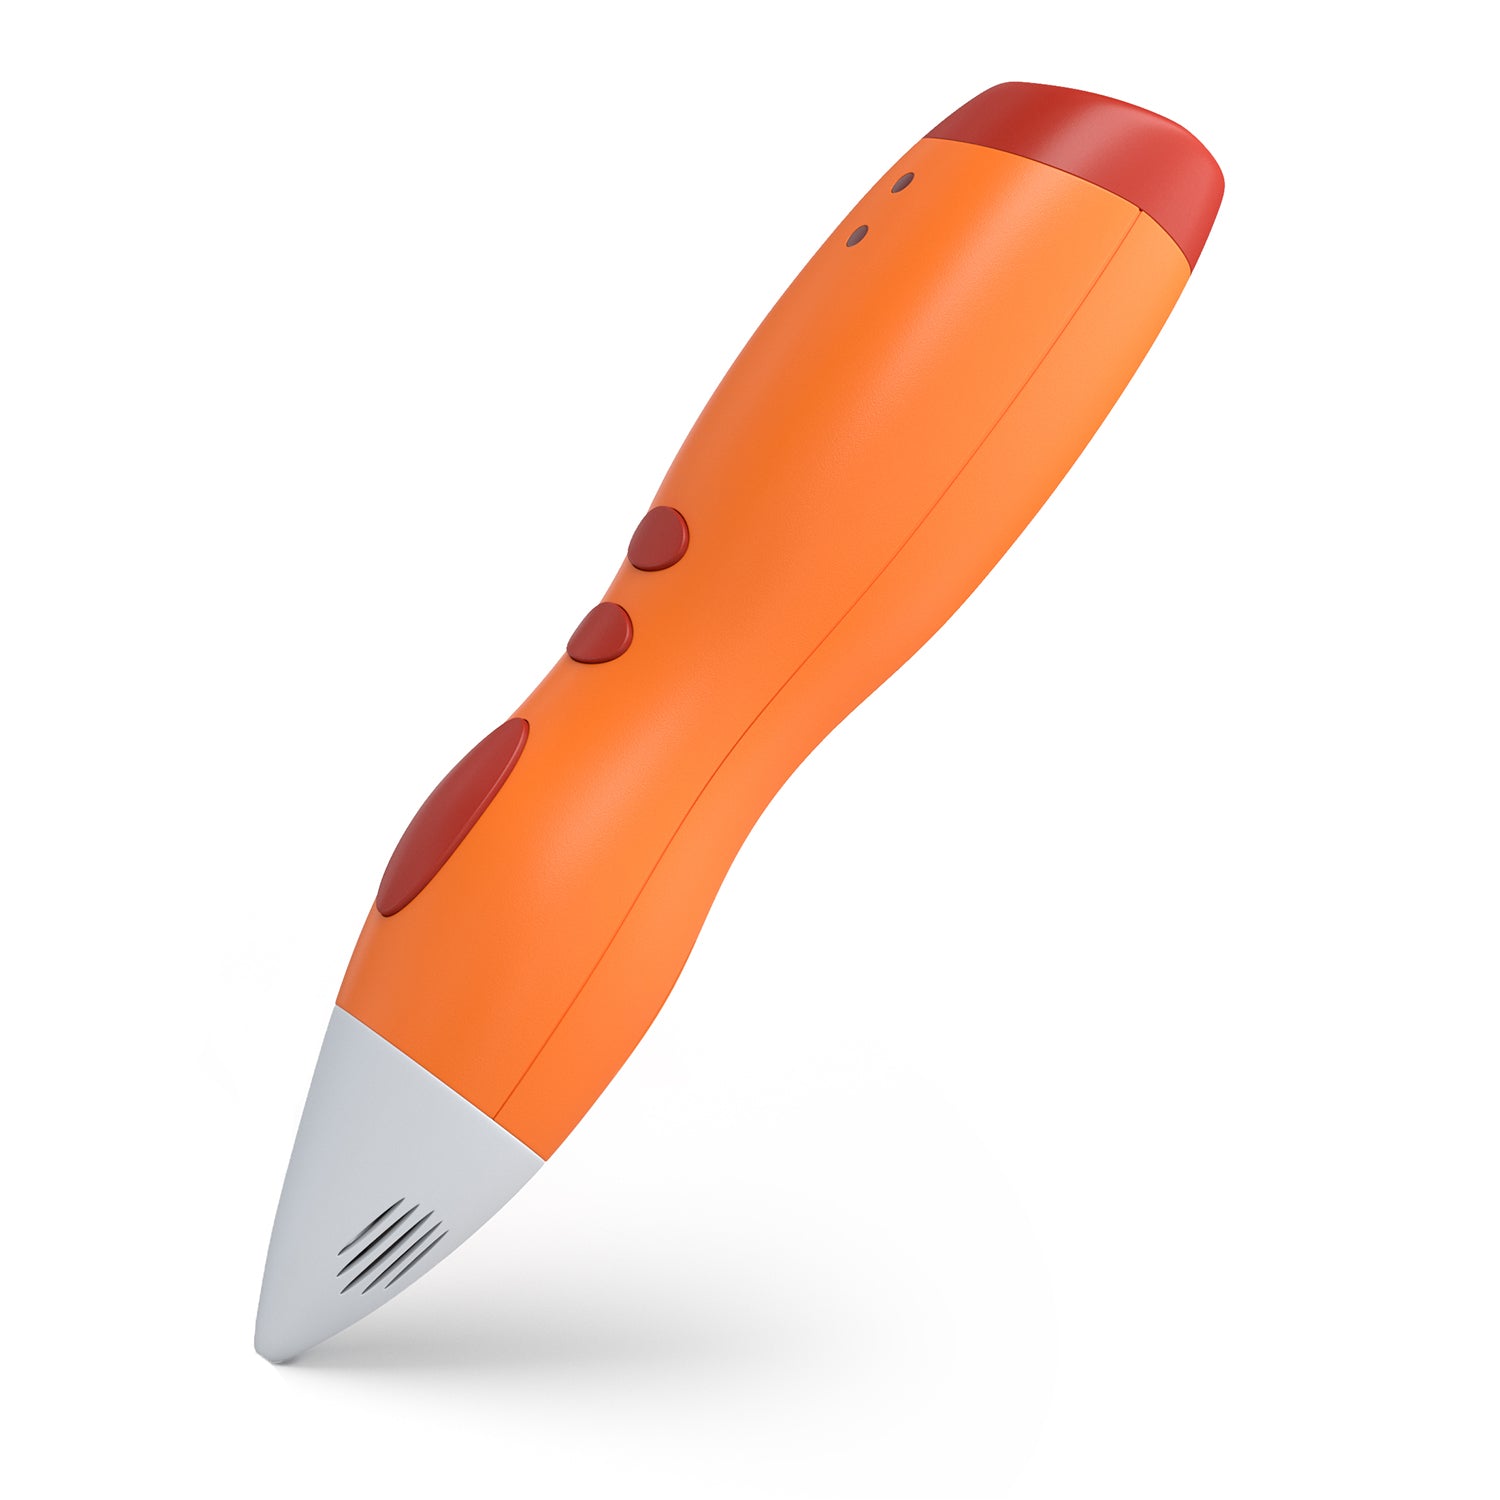 EZprinter Unique 3D Pen For Kids - Allochild